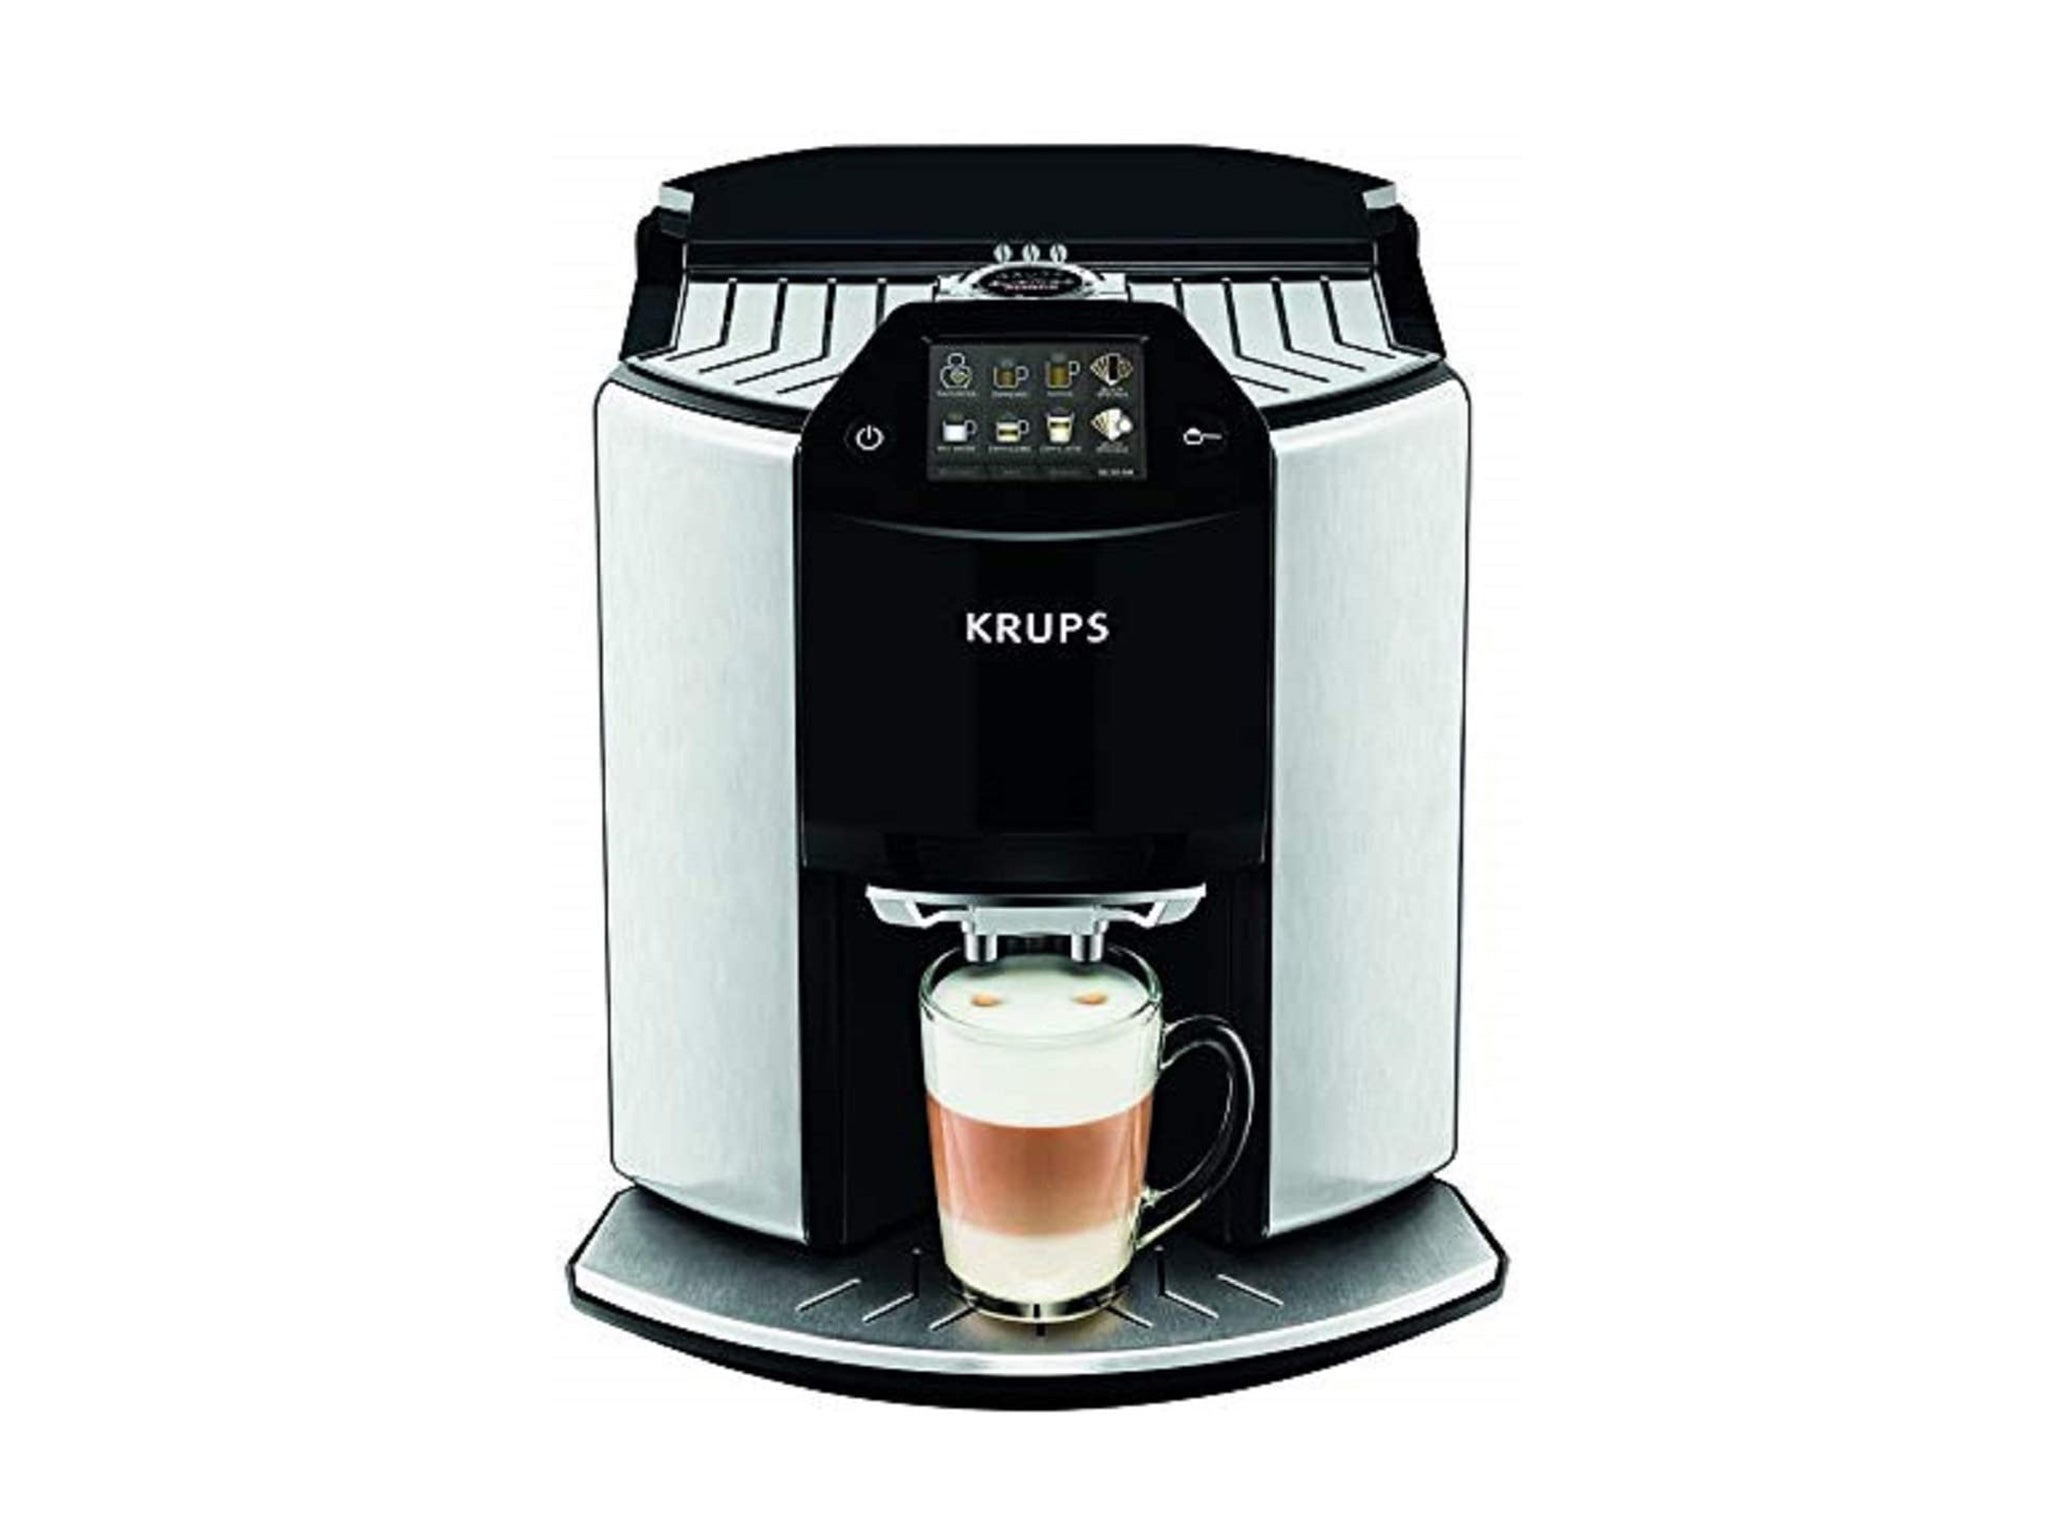 robin-james-gamechangers-indybest-krups-coffee-machine.jpg